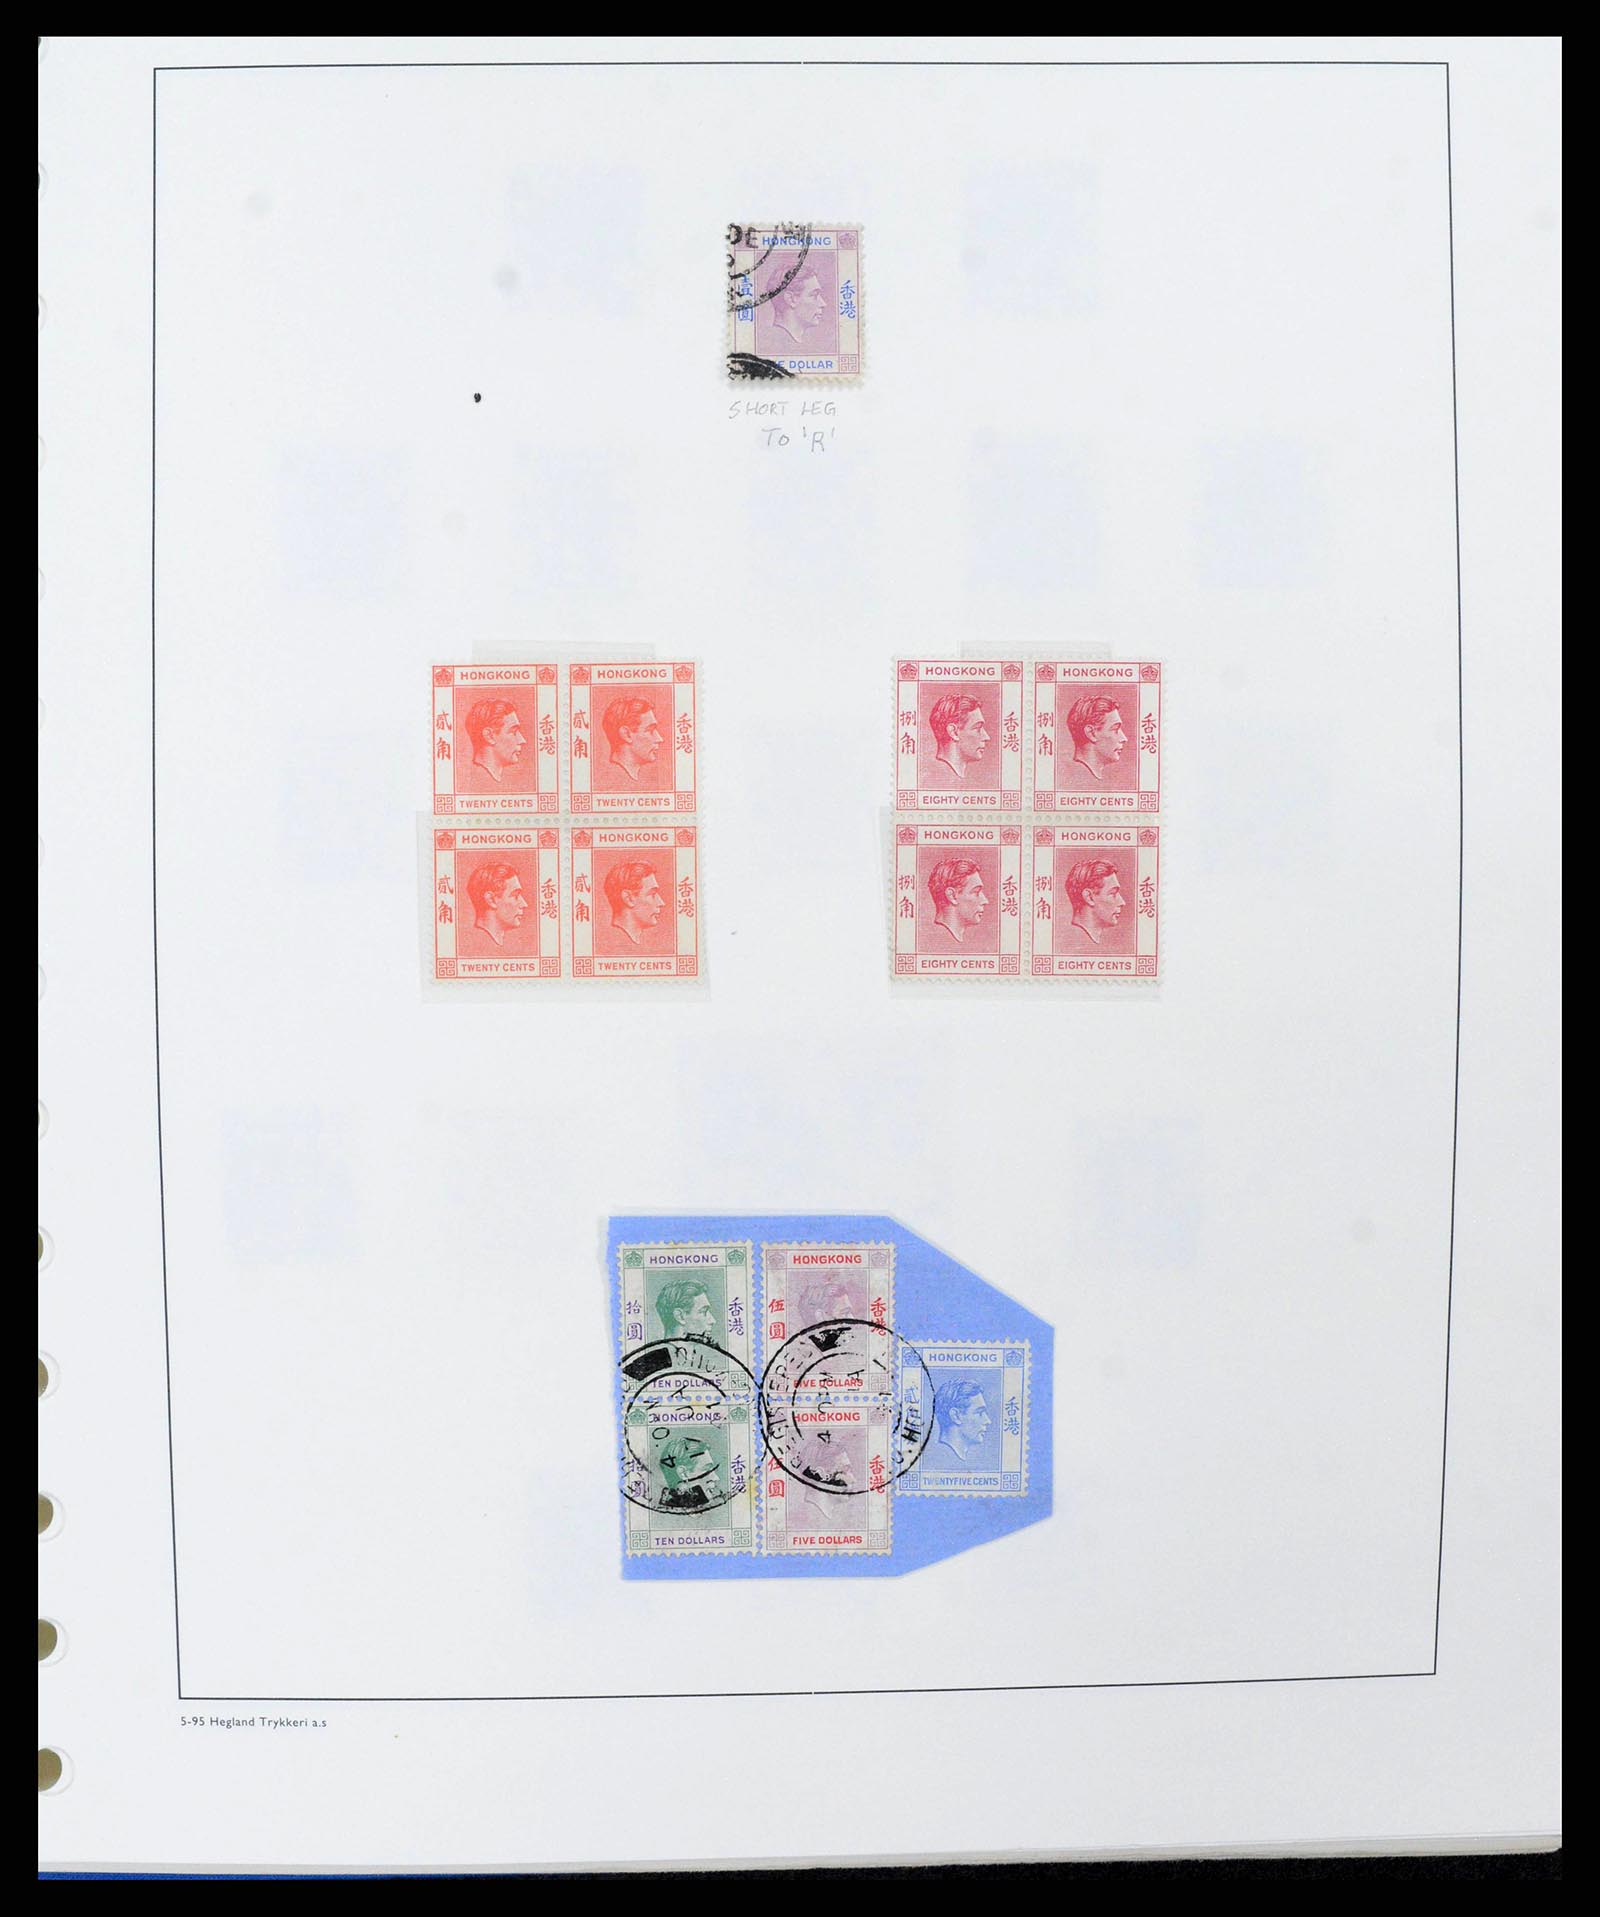 37955 0037 - Stamp collection 37955 Hong Kong supercollection 1862-2007.